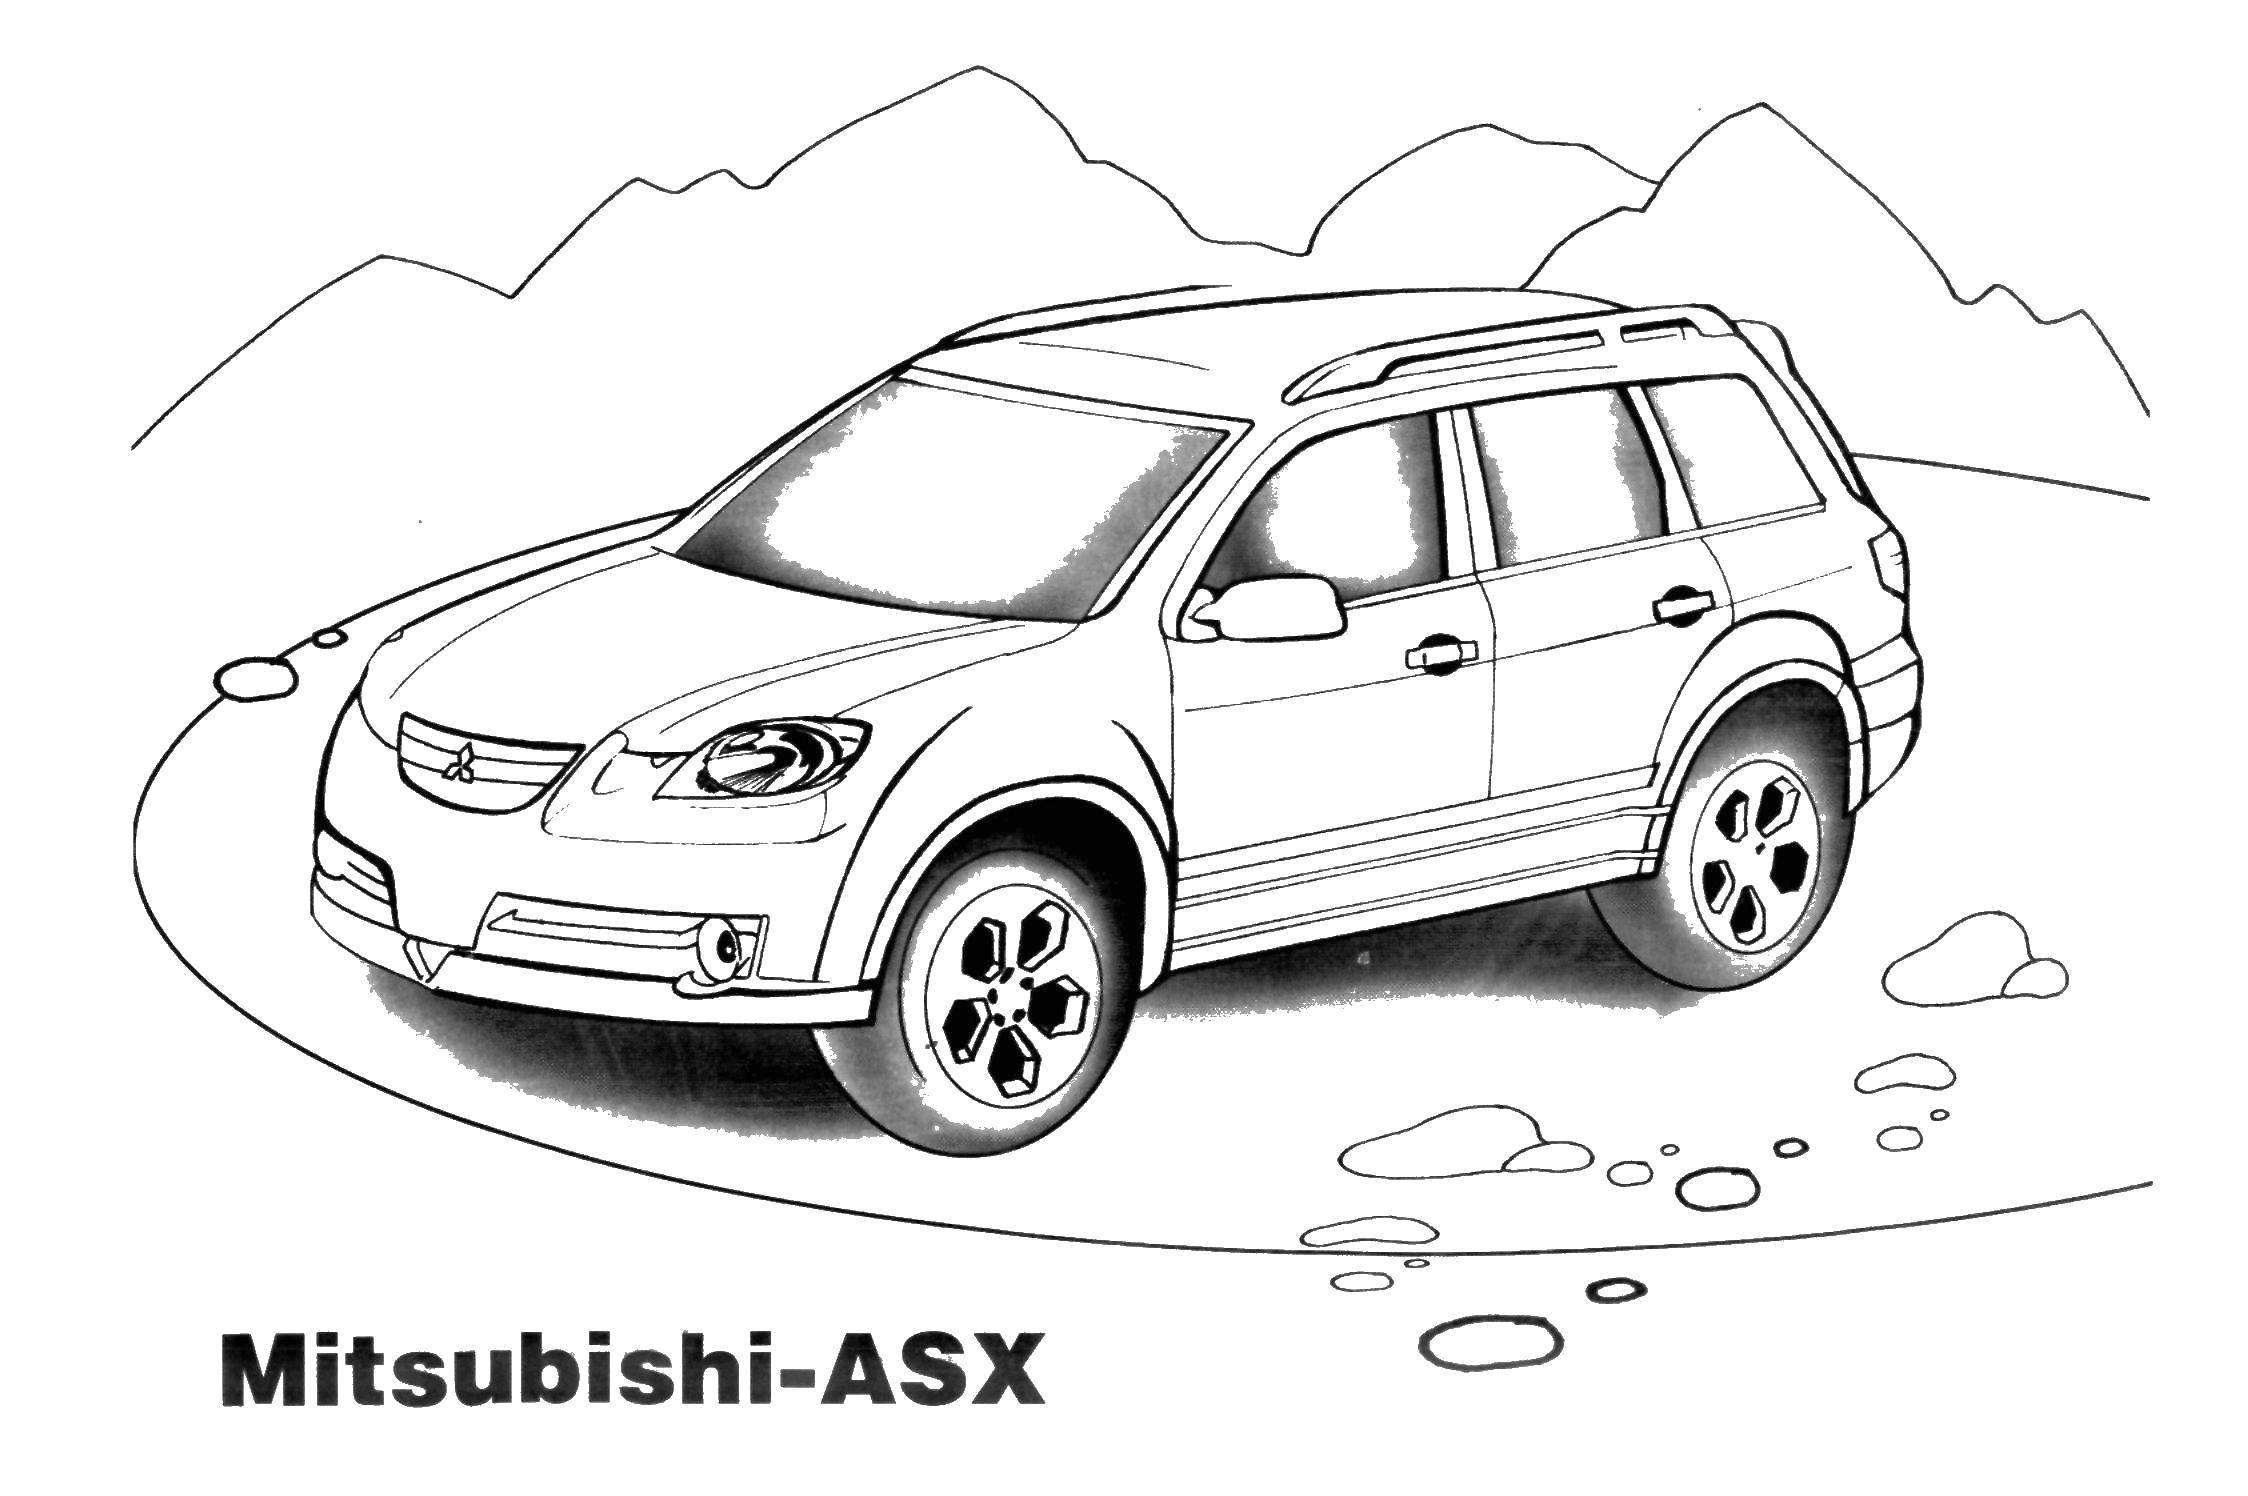 Coloring Mitsubishi asx cars. Category machine . Tags:  mitsubisi.